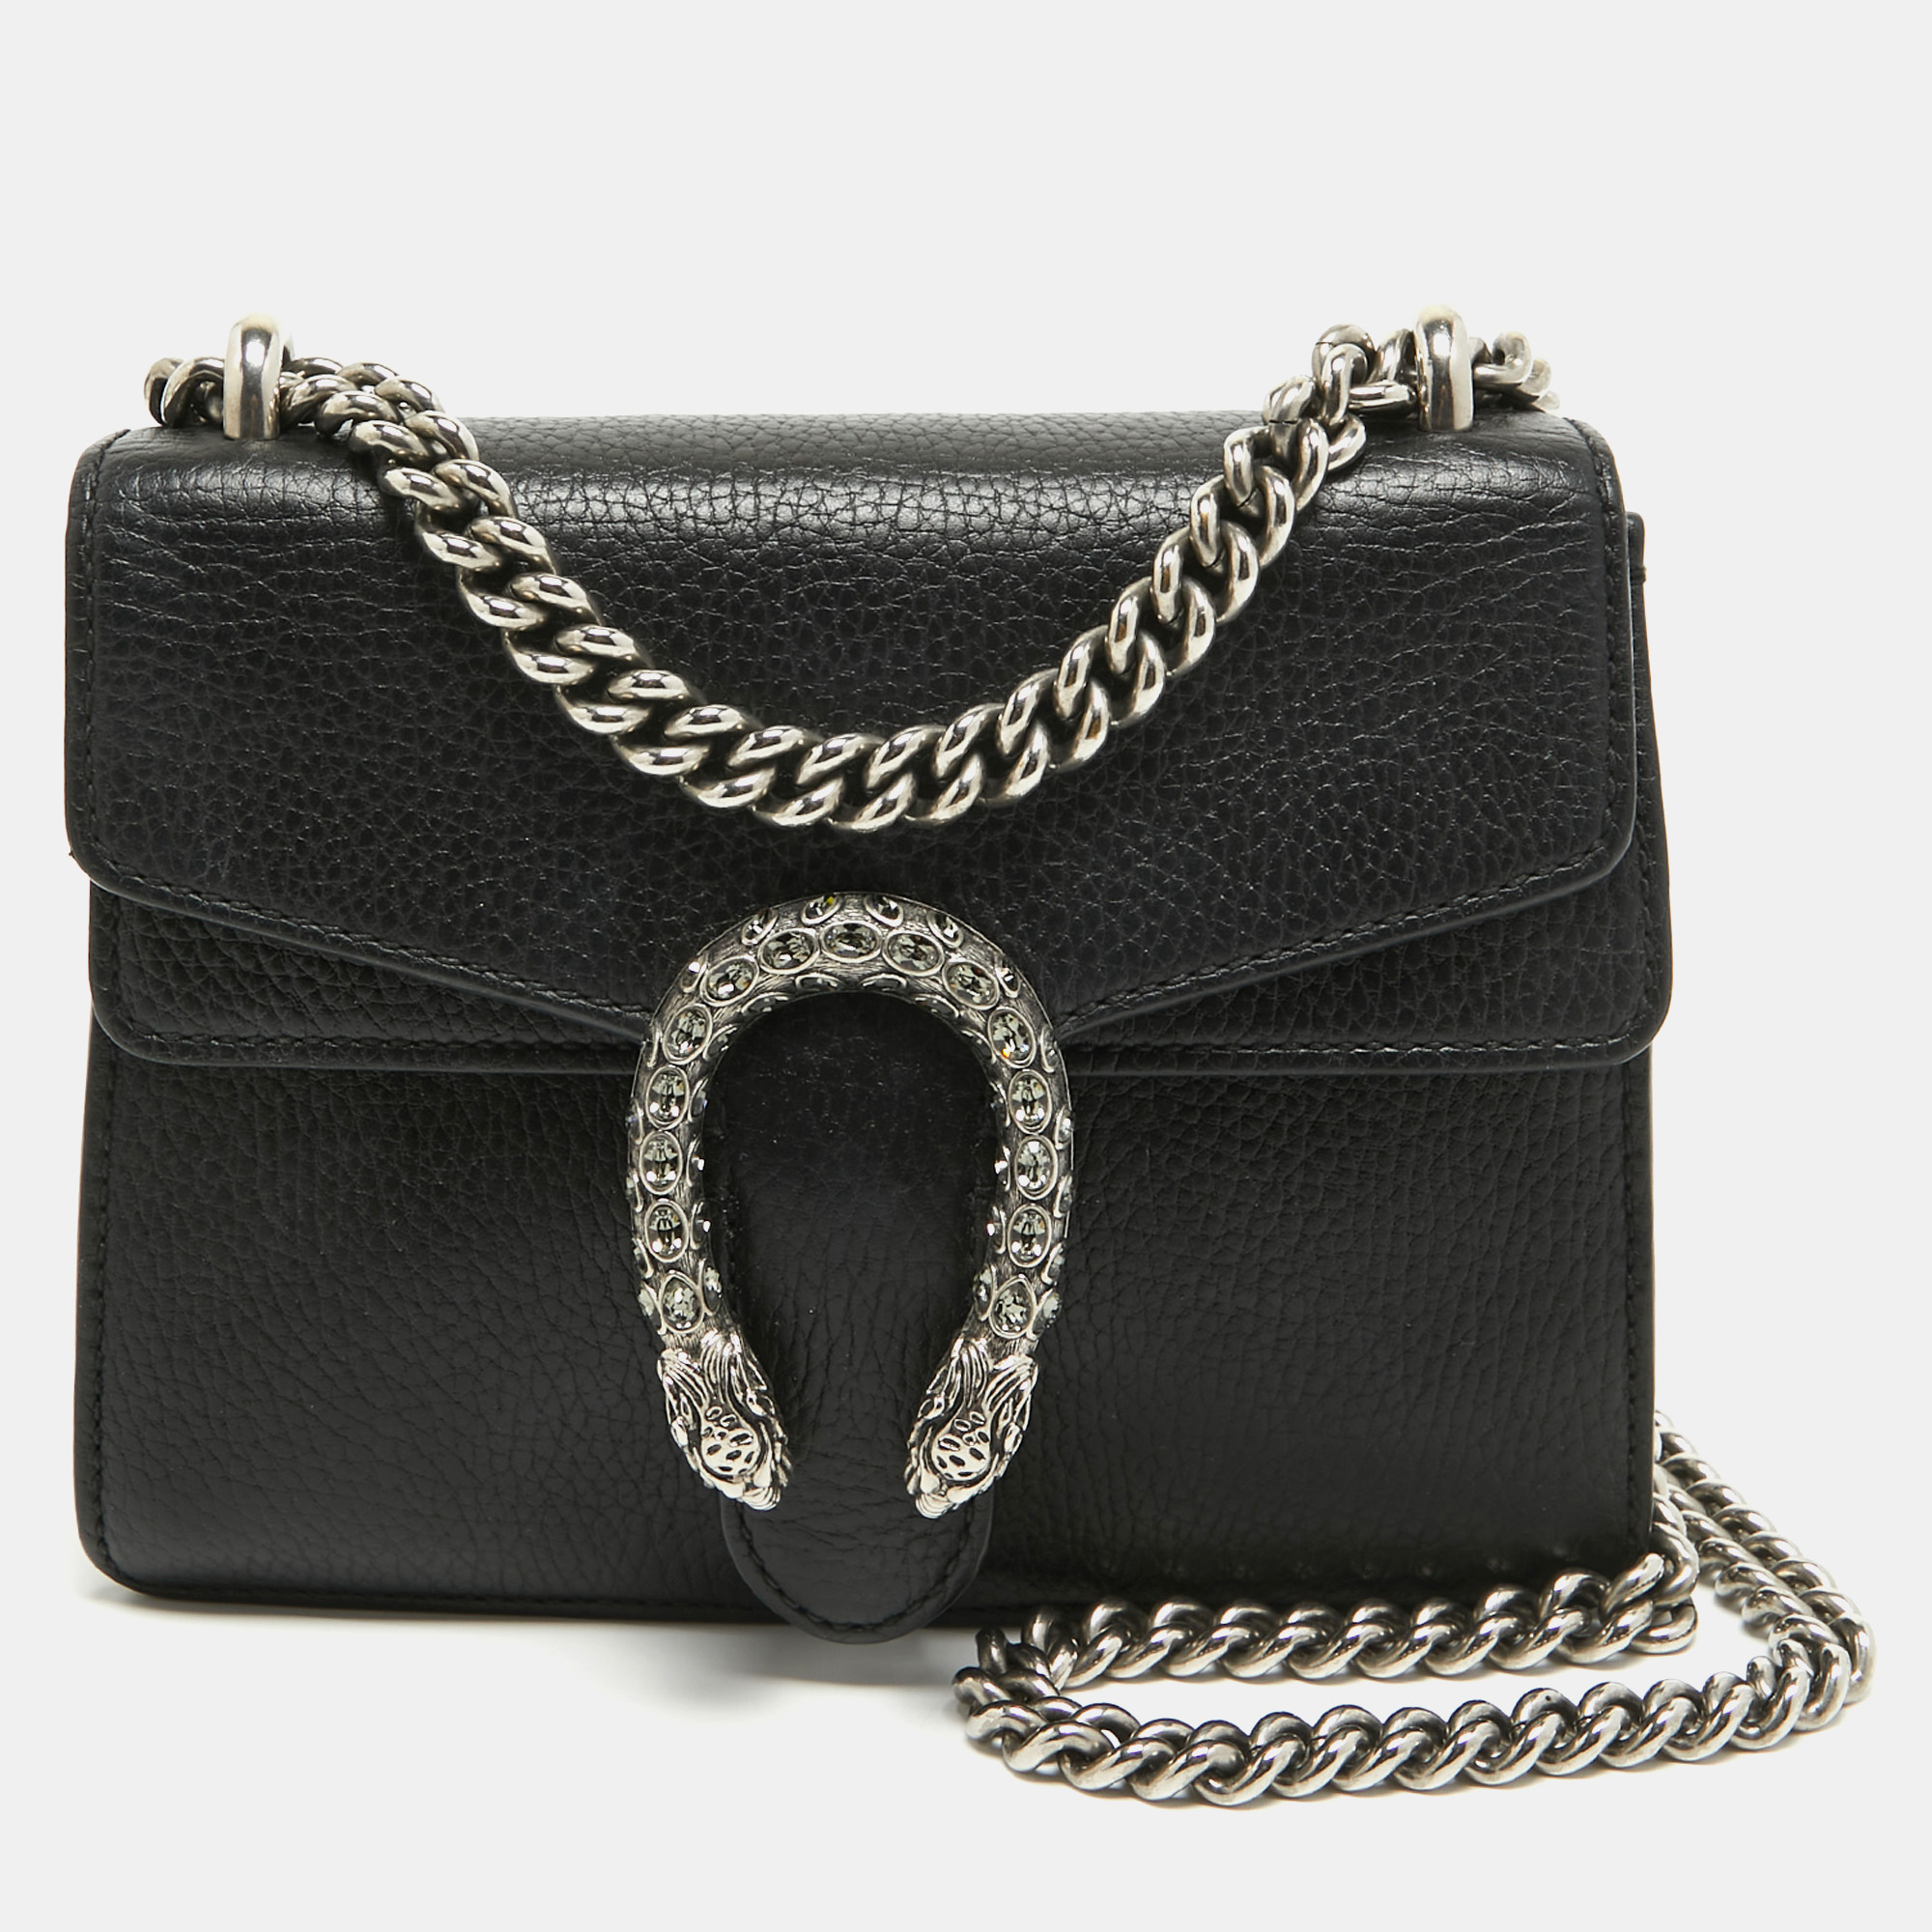 Gucci black leather mini dionysus shoulder bag